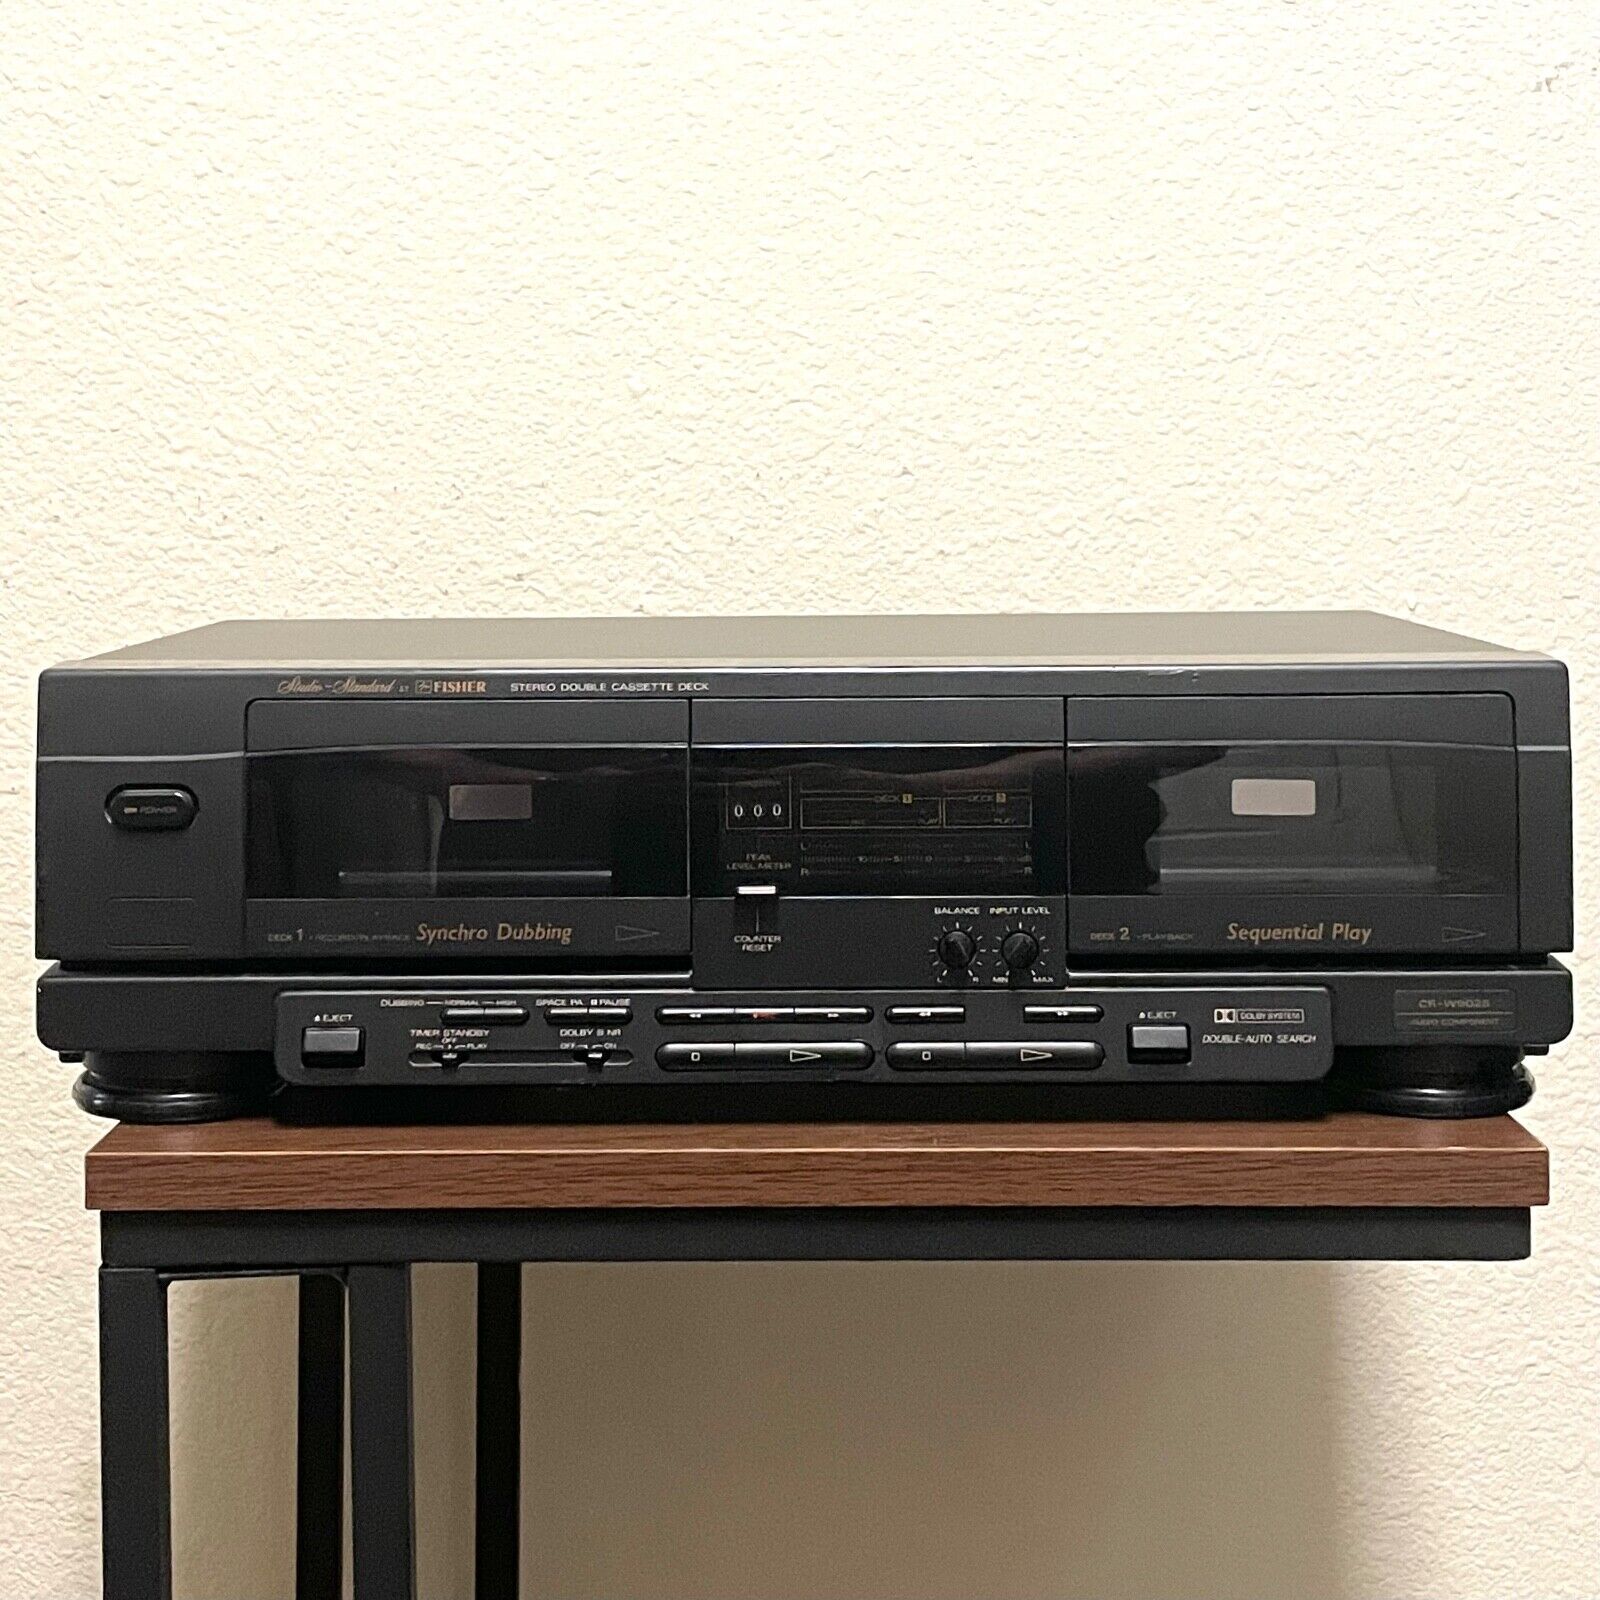 Studio-Standard by Fisher Stereo Double Cassette Deck CR-W9025 -Япония-Годы выпуска 1990 - 1993